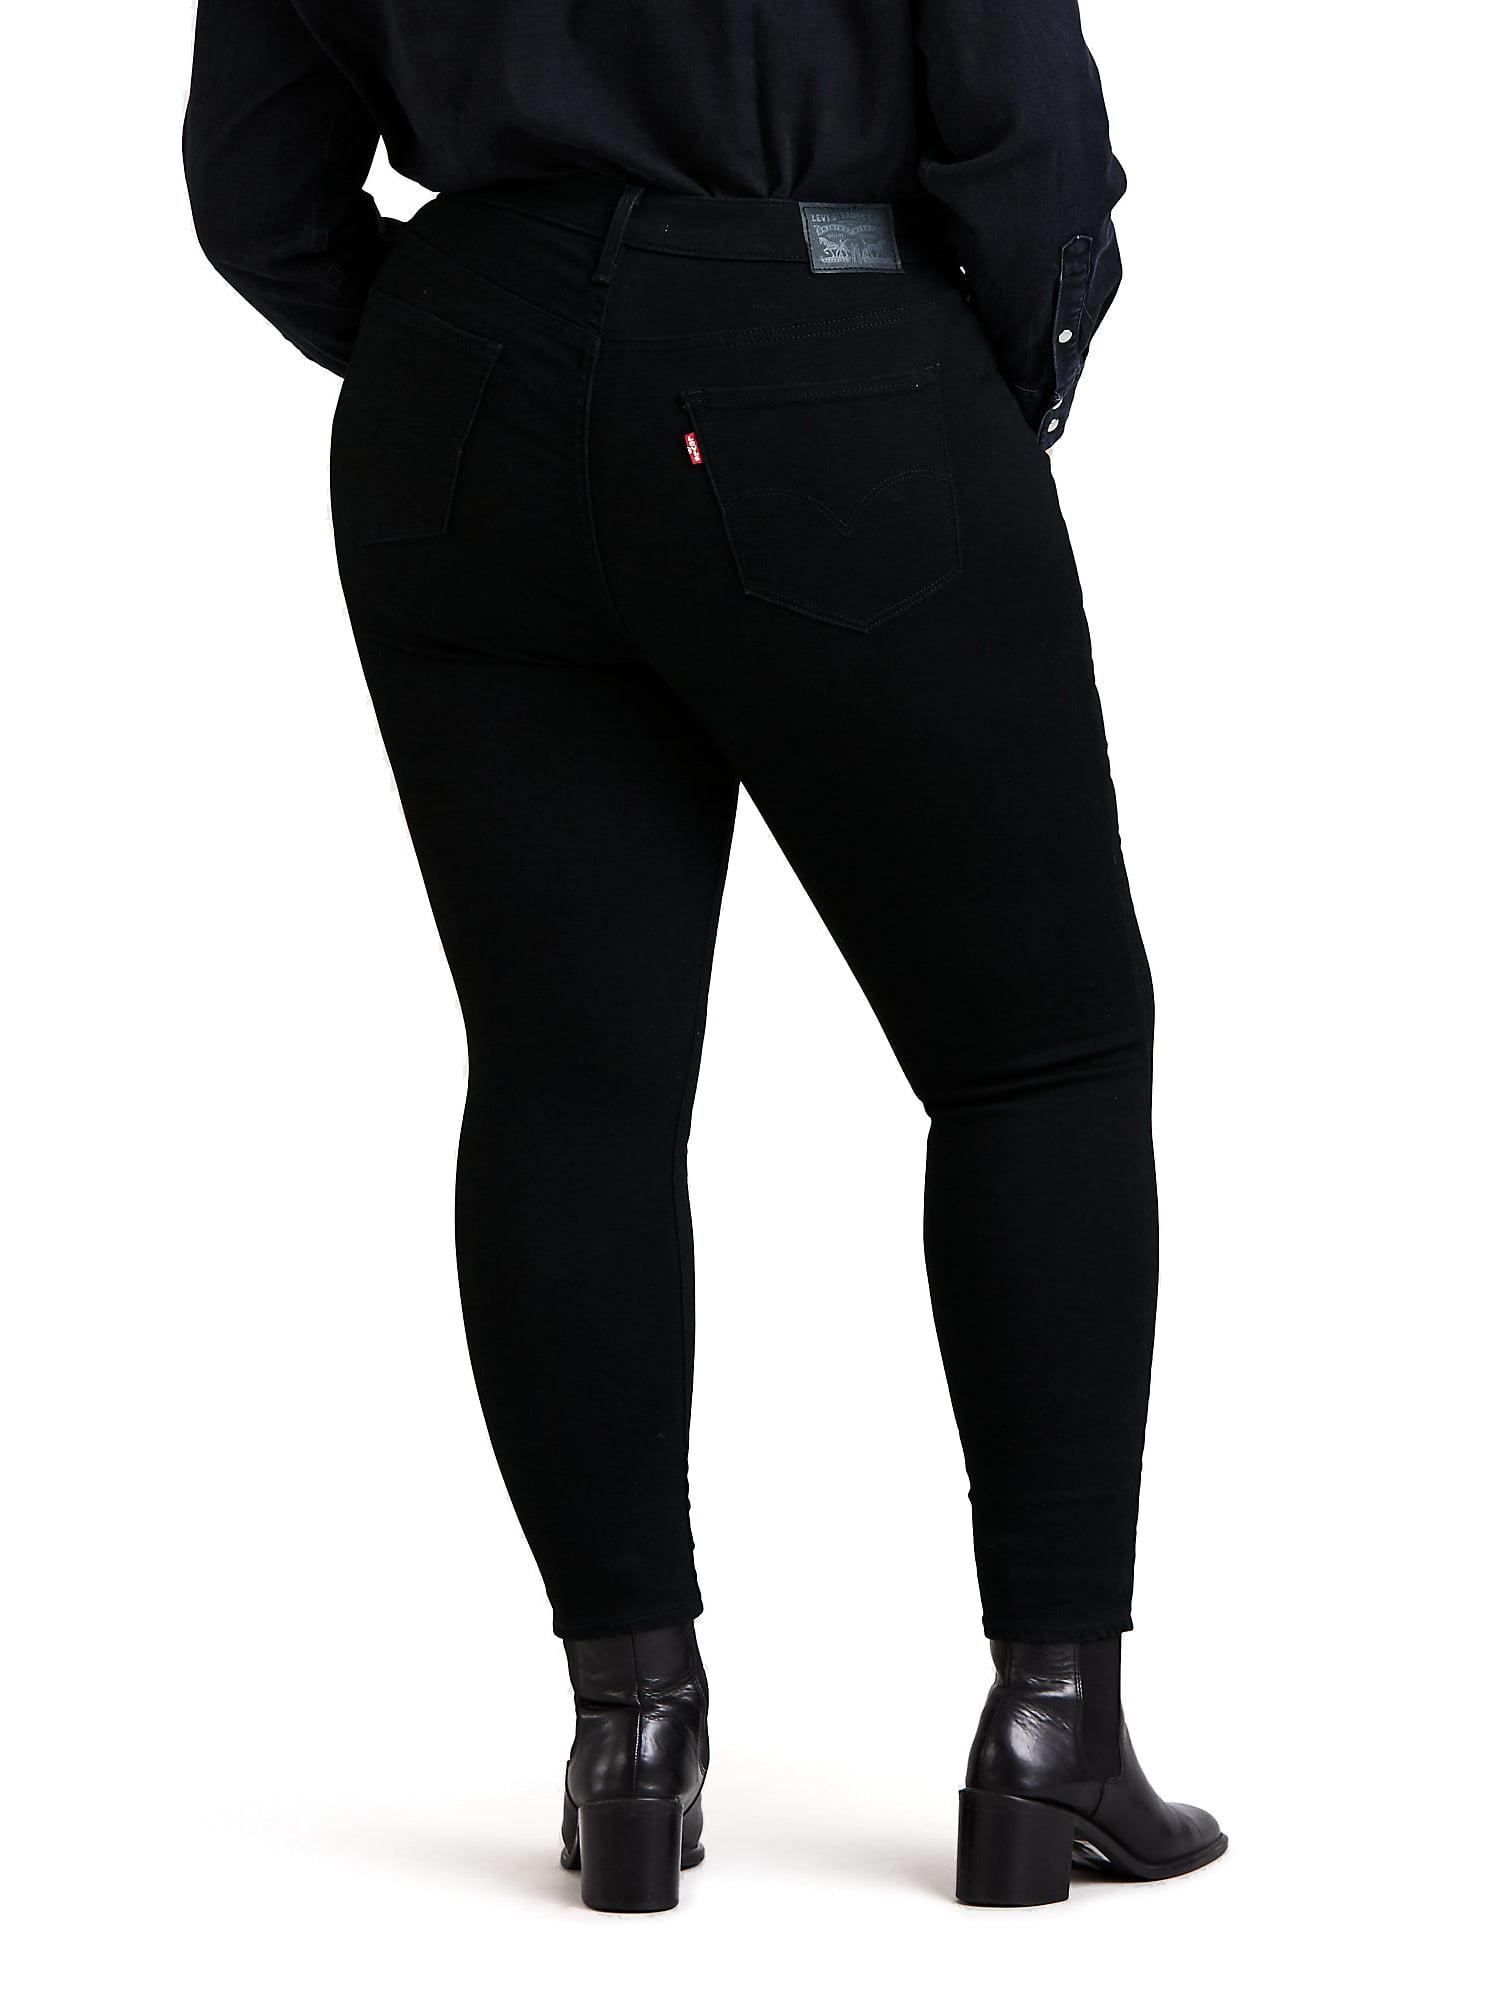 Levi's Women's Plus Size 720 High-Rise Super Skinny Jeans 